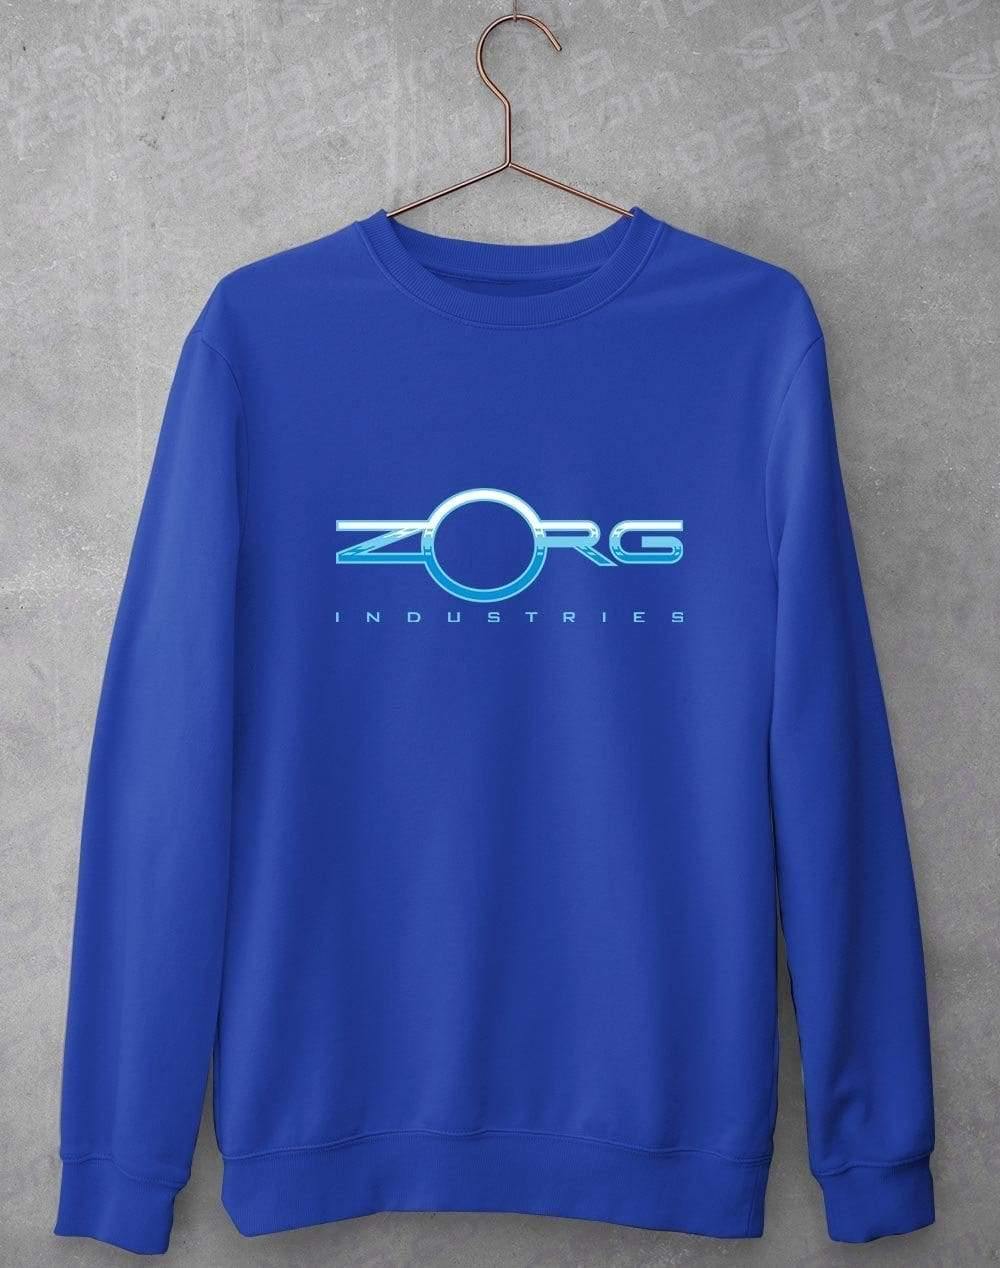 Zorg Industries Sweatshirt S / Royal  - Off World Tees